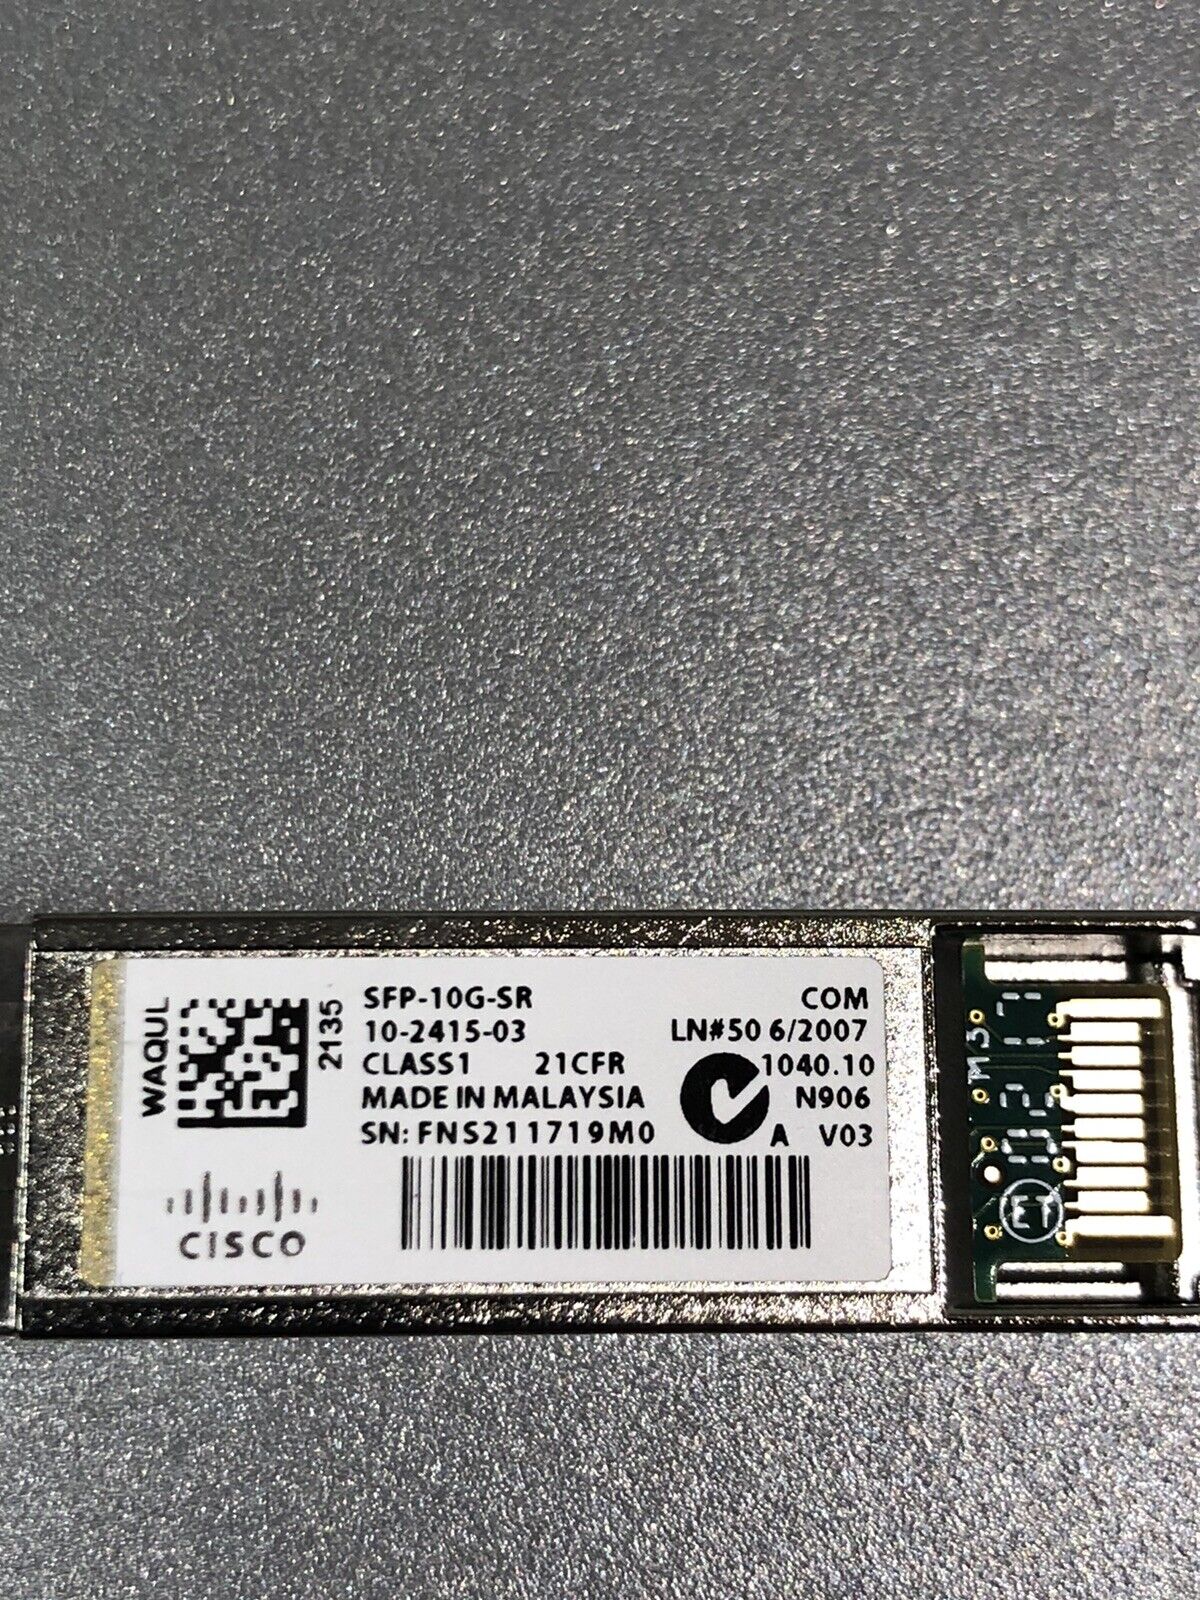 Cisco 10-2415-03 10G-SR SFP+ FC LC-LC Multi-Mode MMF 850nm 300m Transceiver